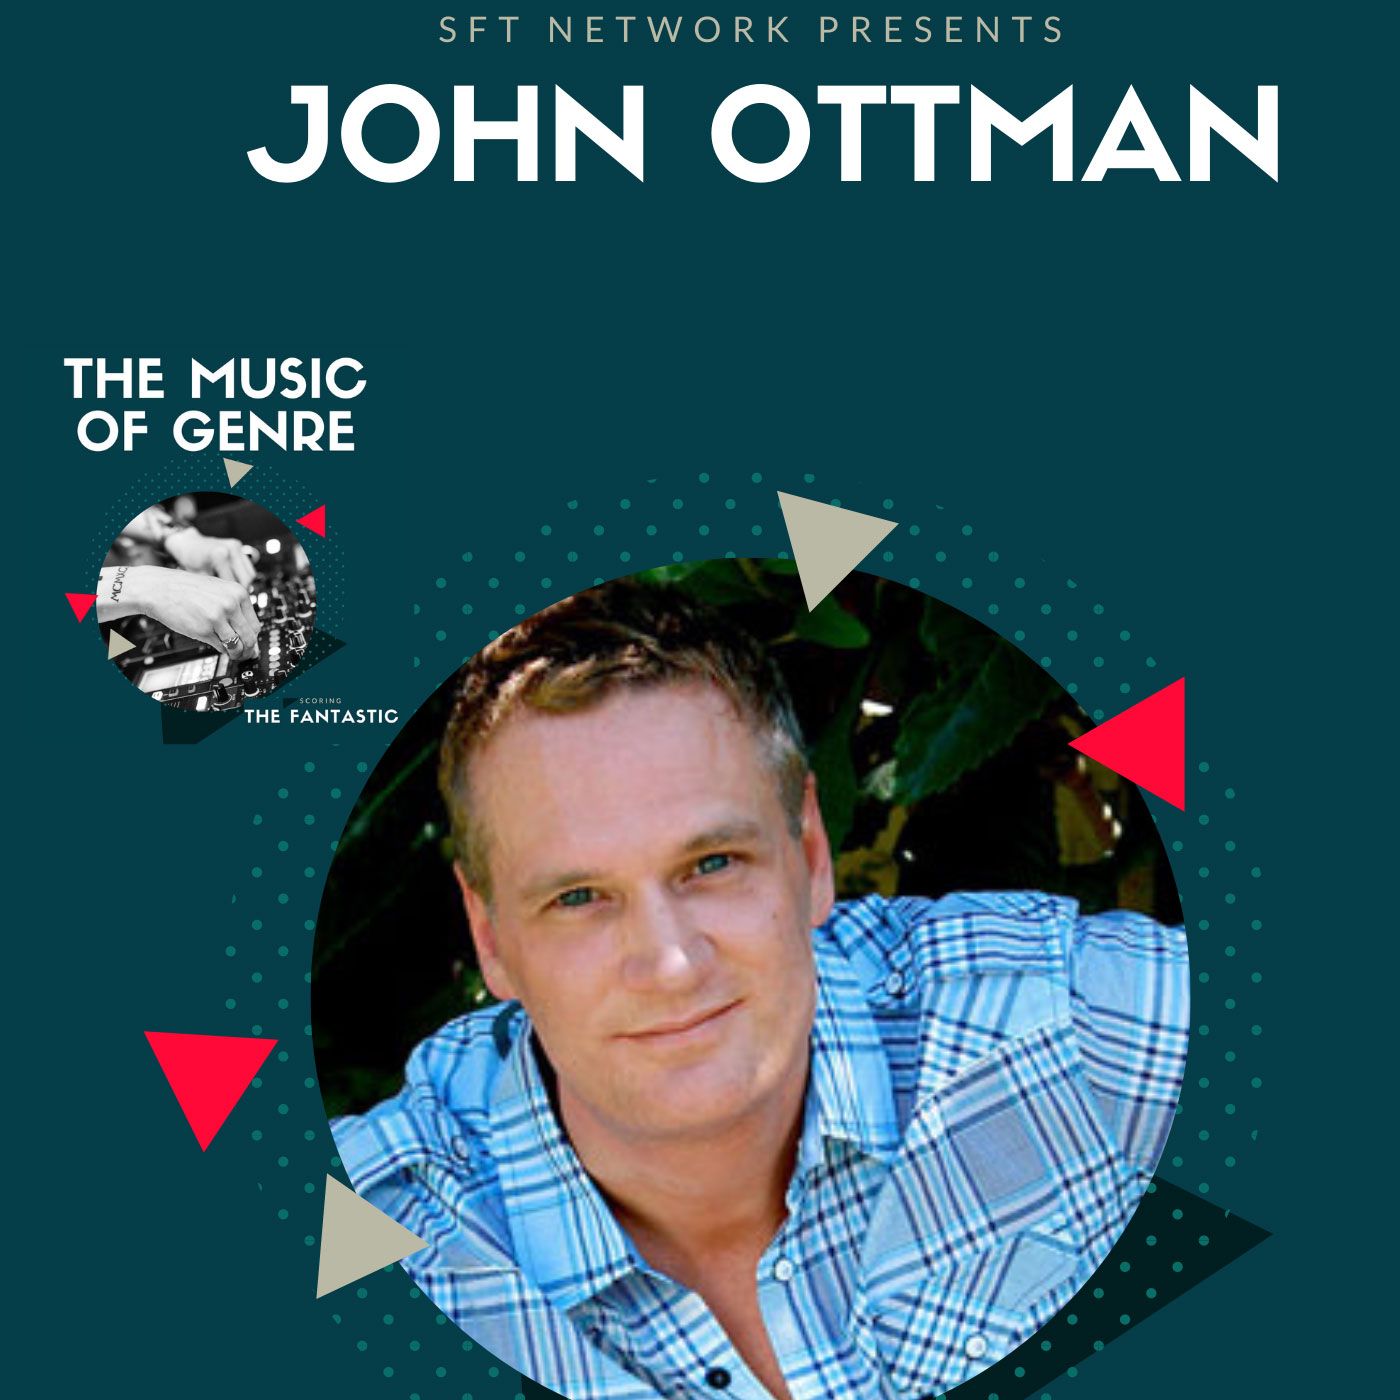 John Ottman